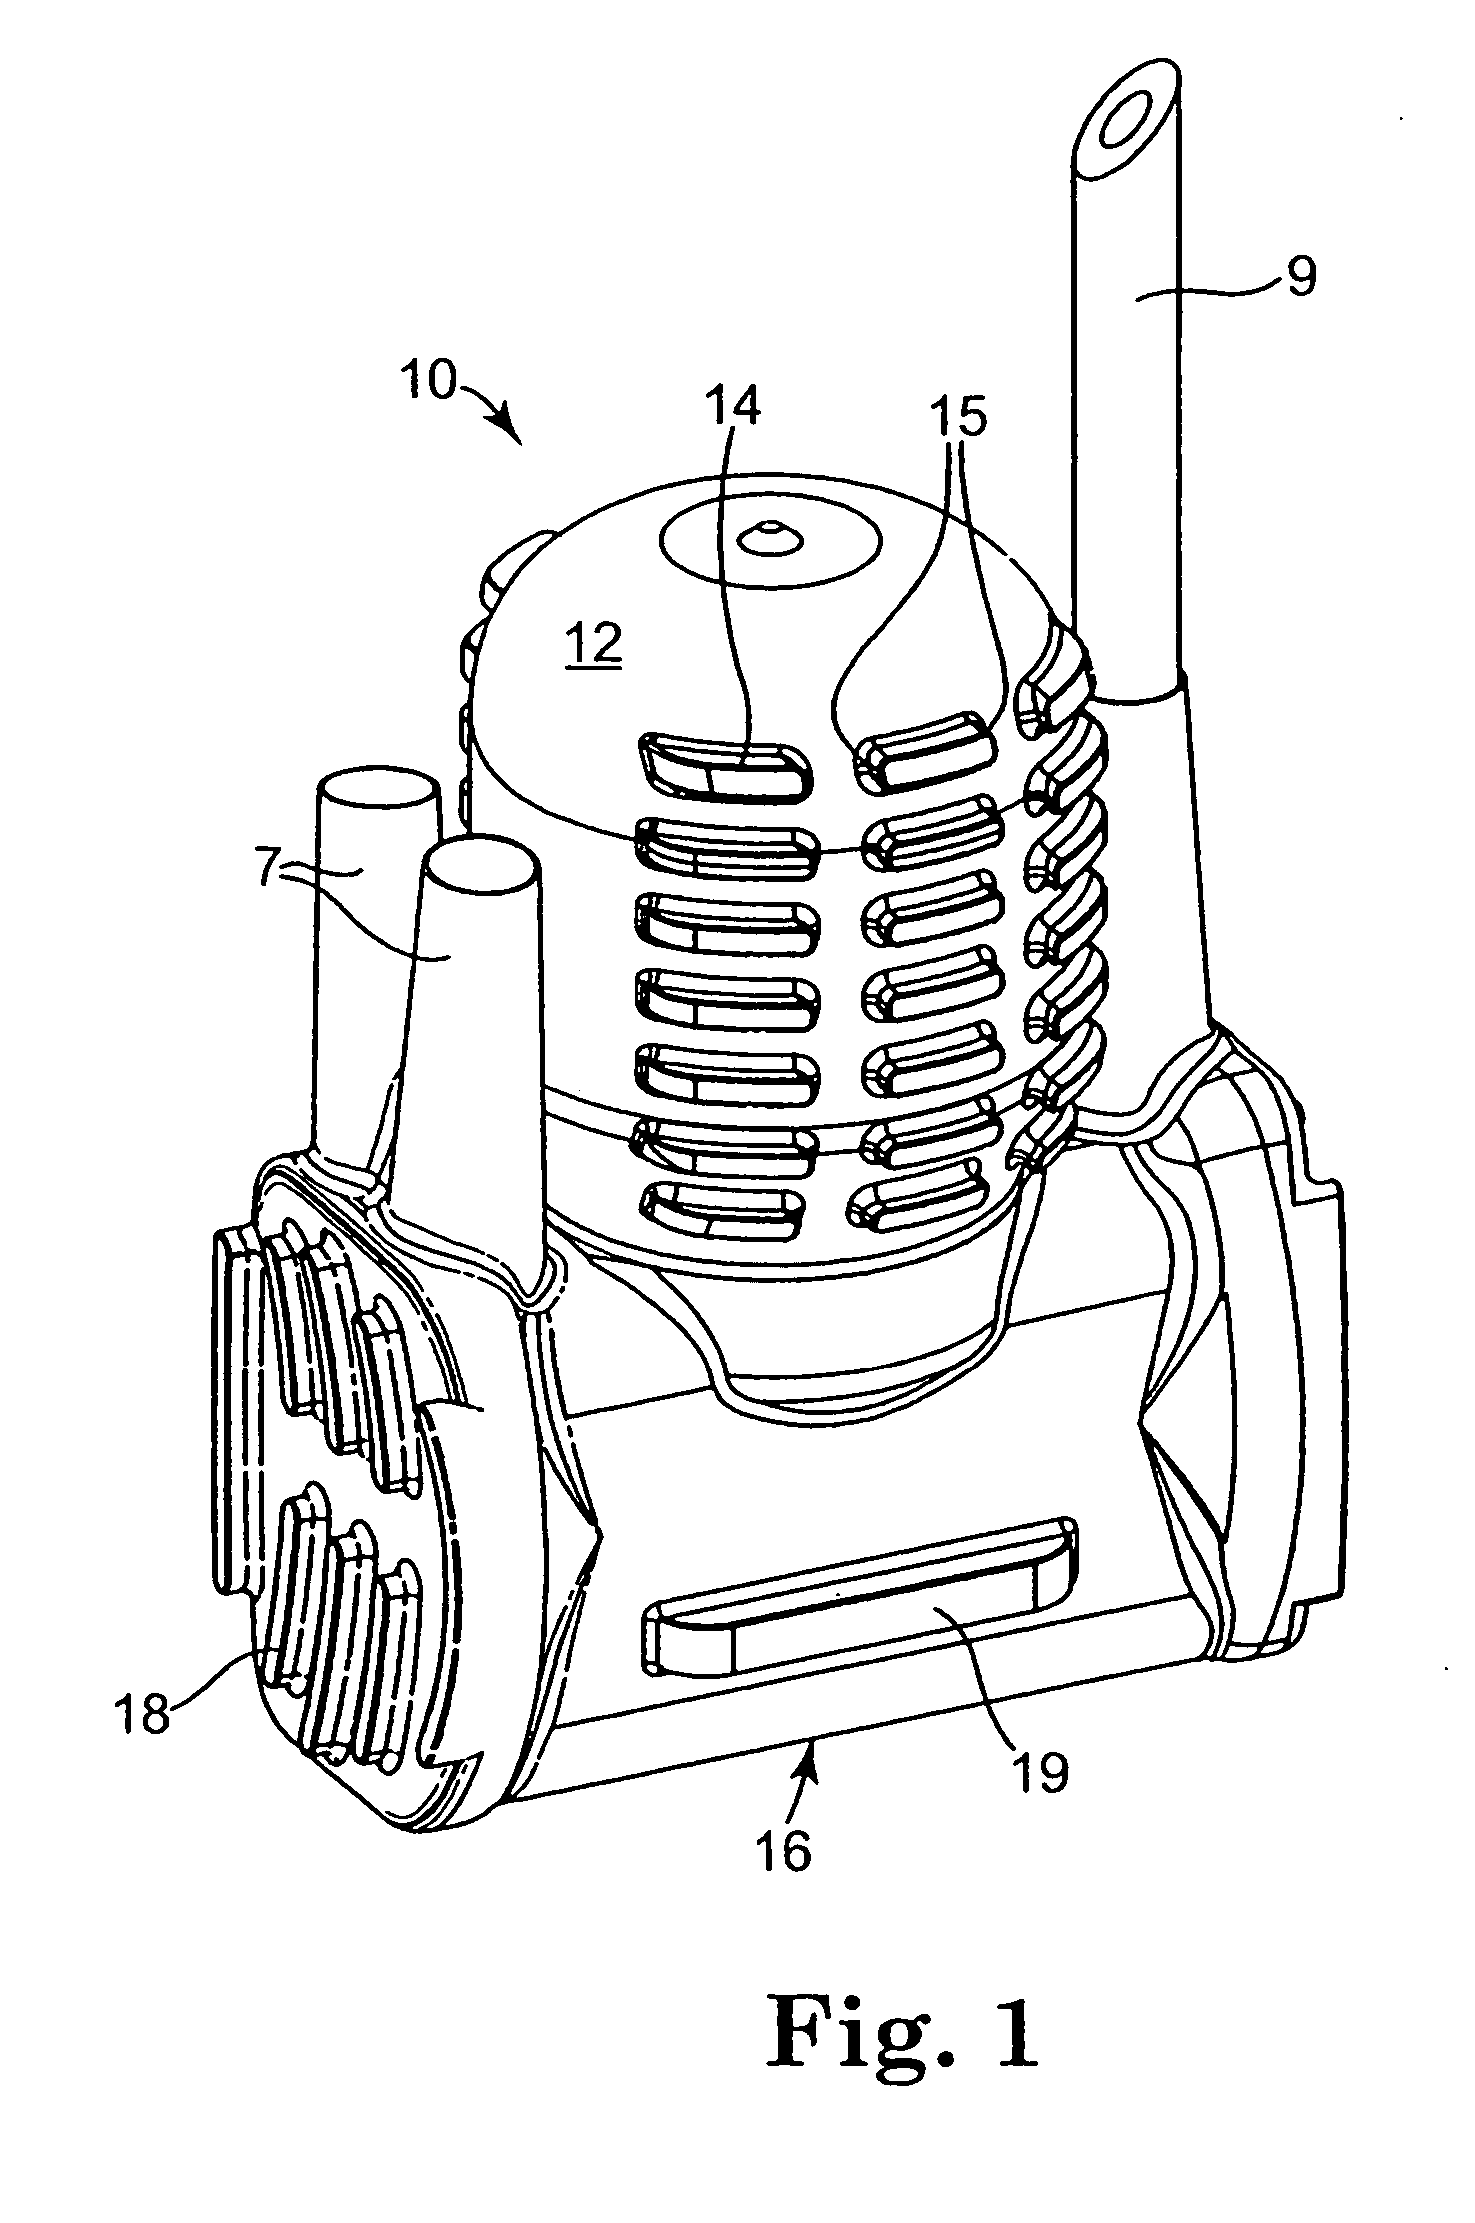 Implantable pump